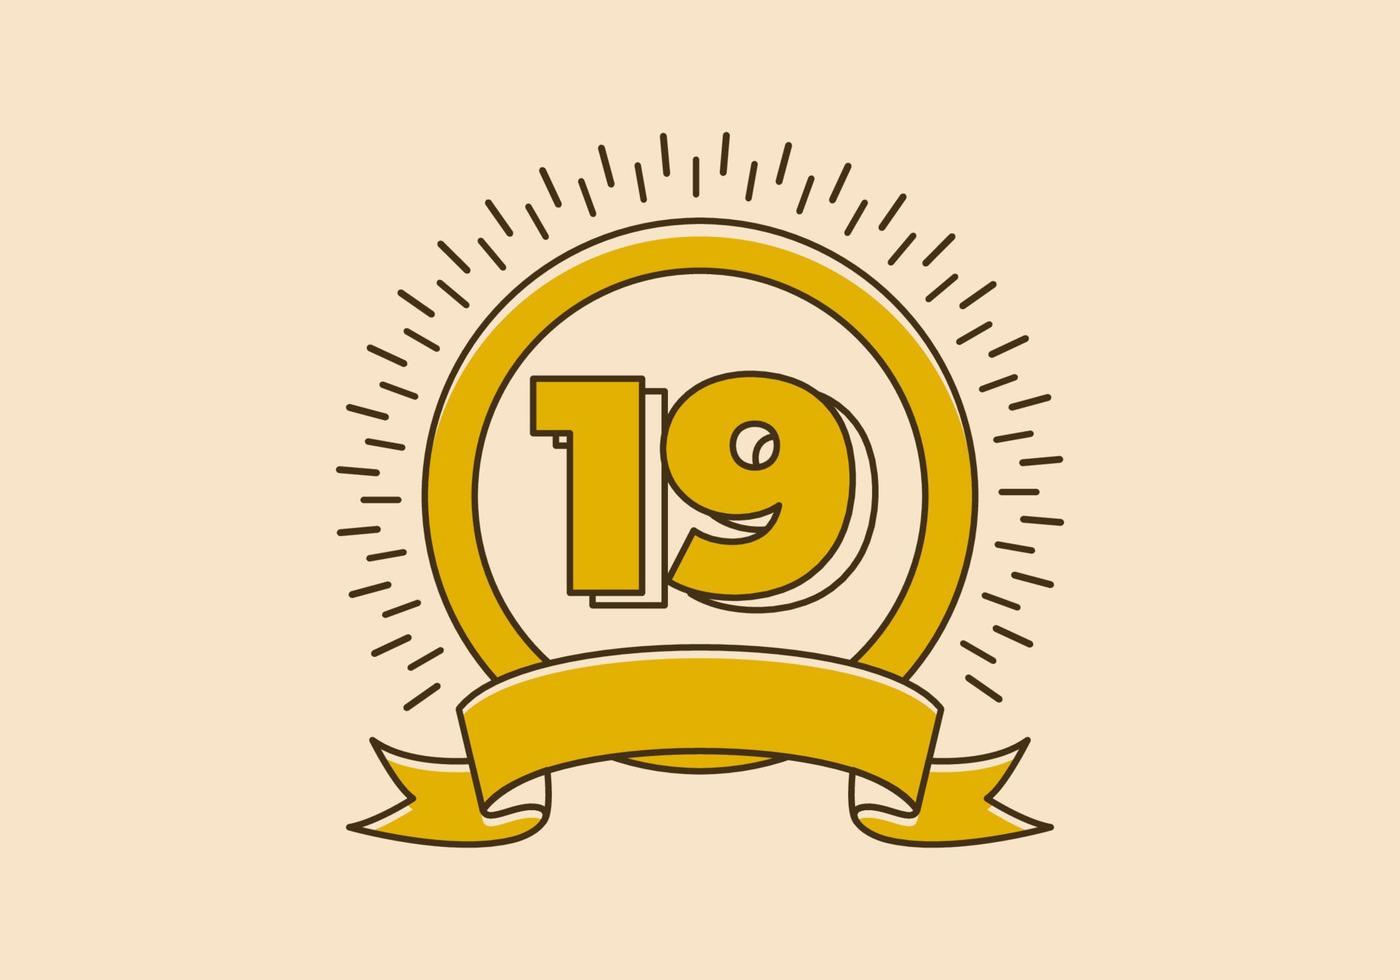 distintivo de círculo amarelo vintage com o número 19 nele vetor